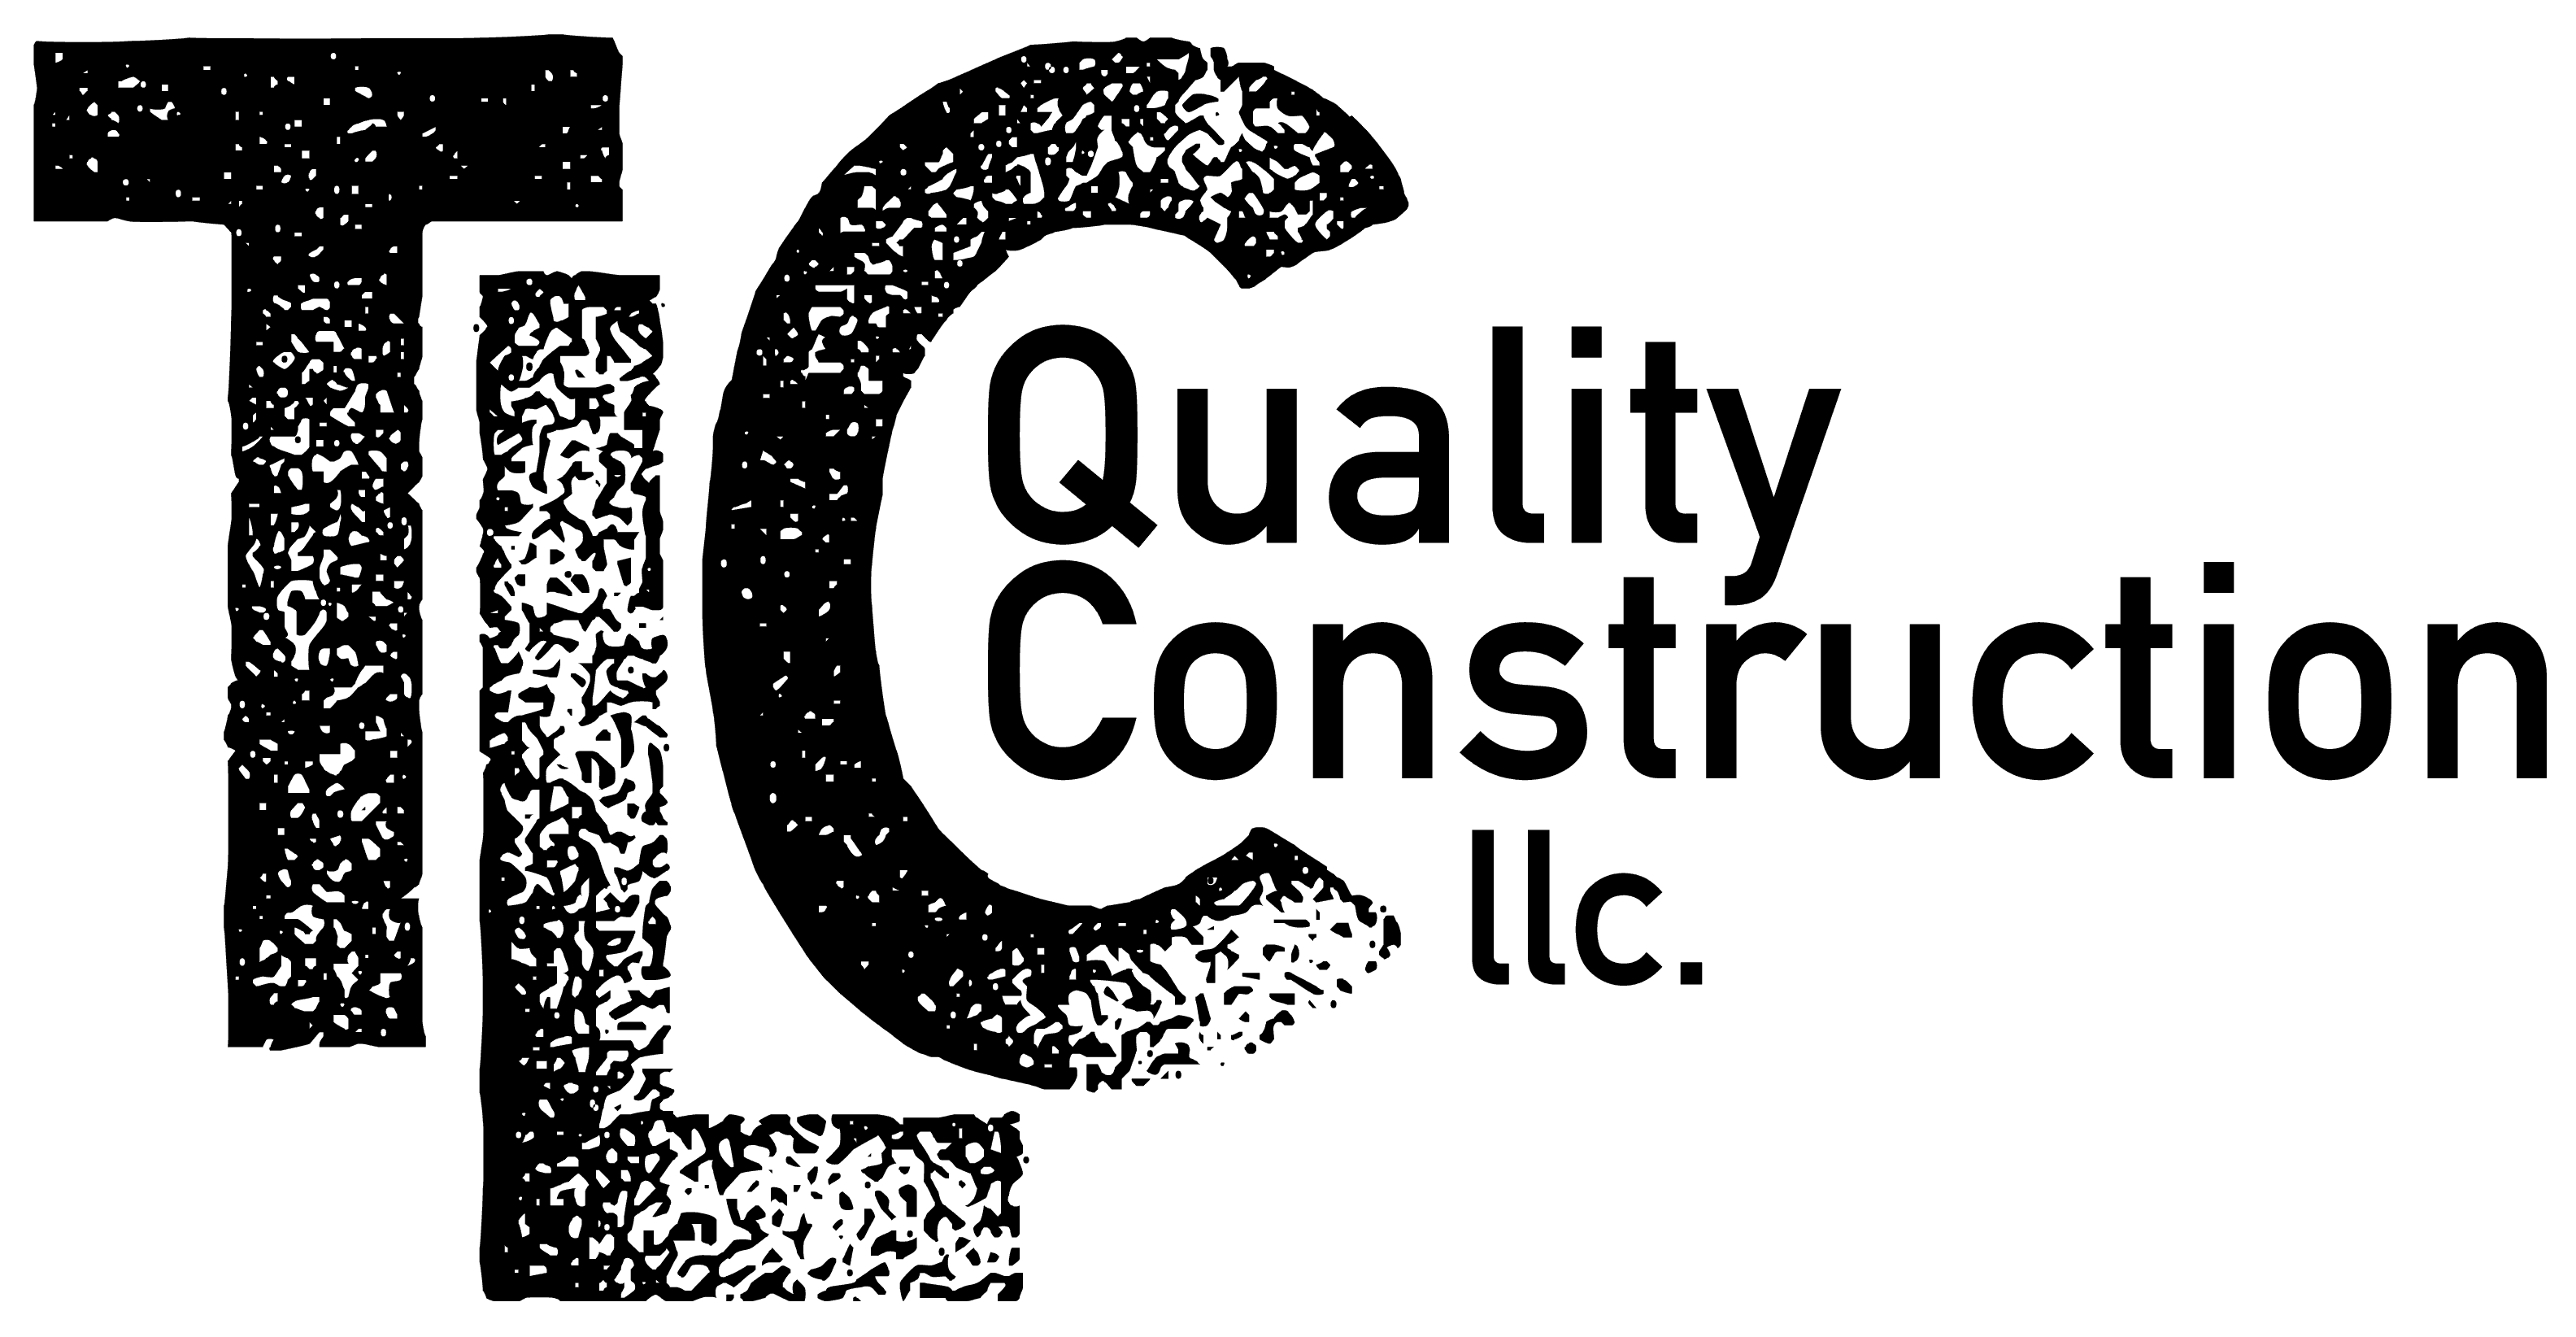 TlC Quality Construction's logo